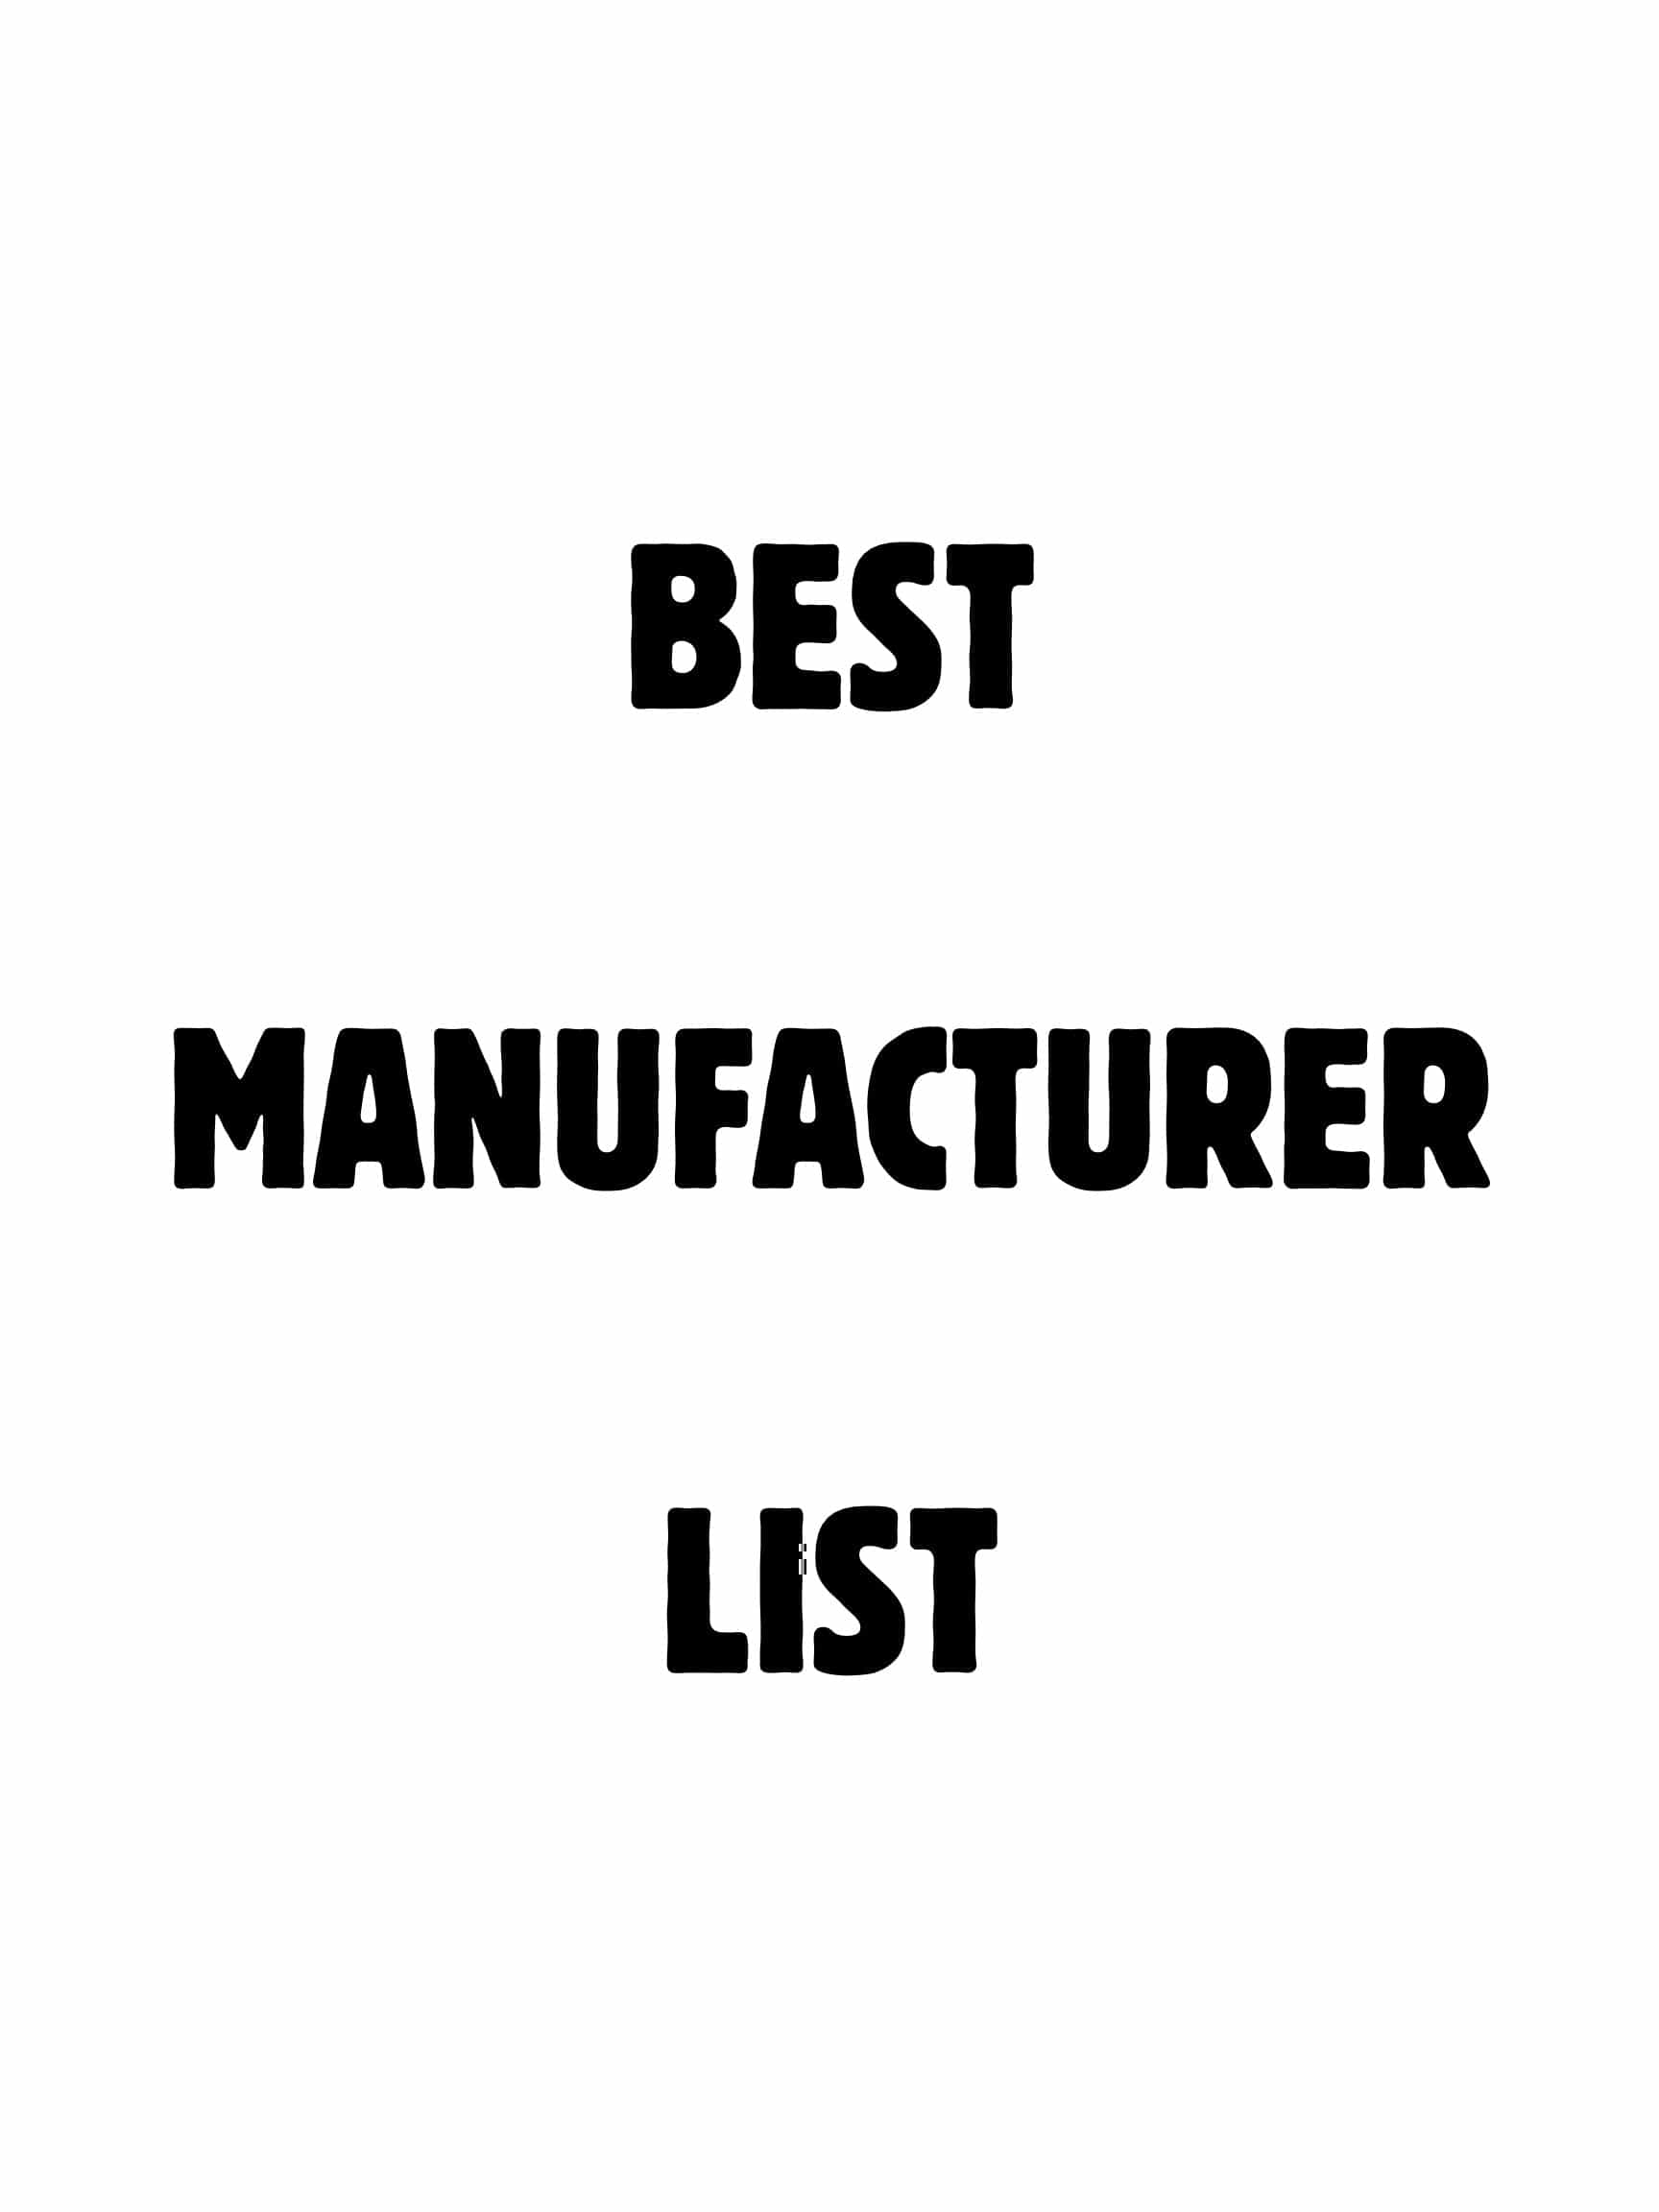 Manufacturing List